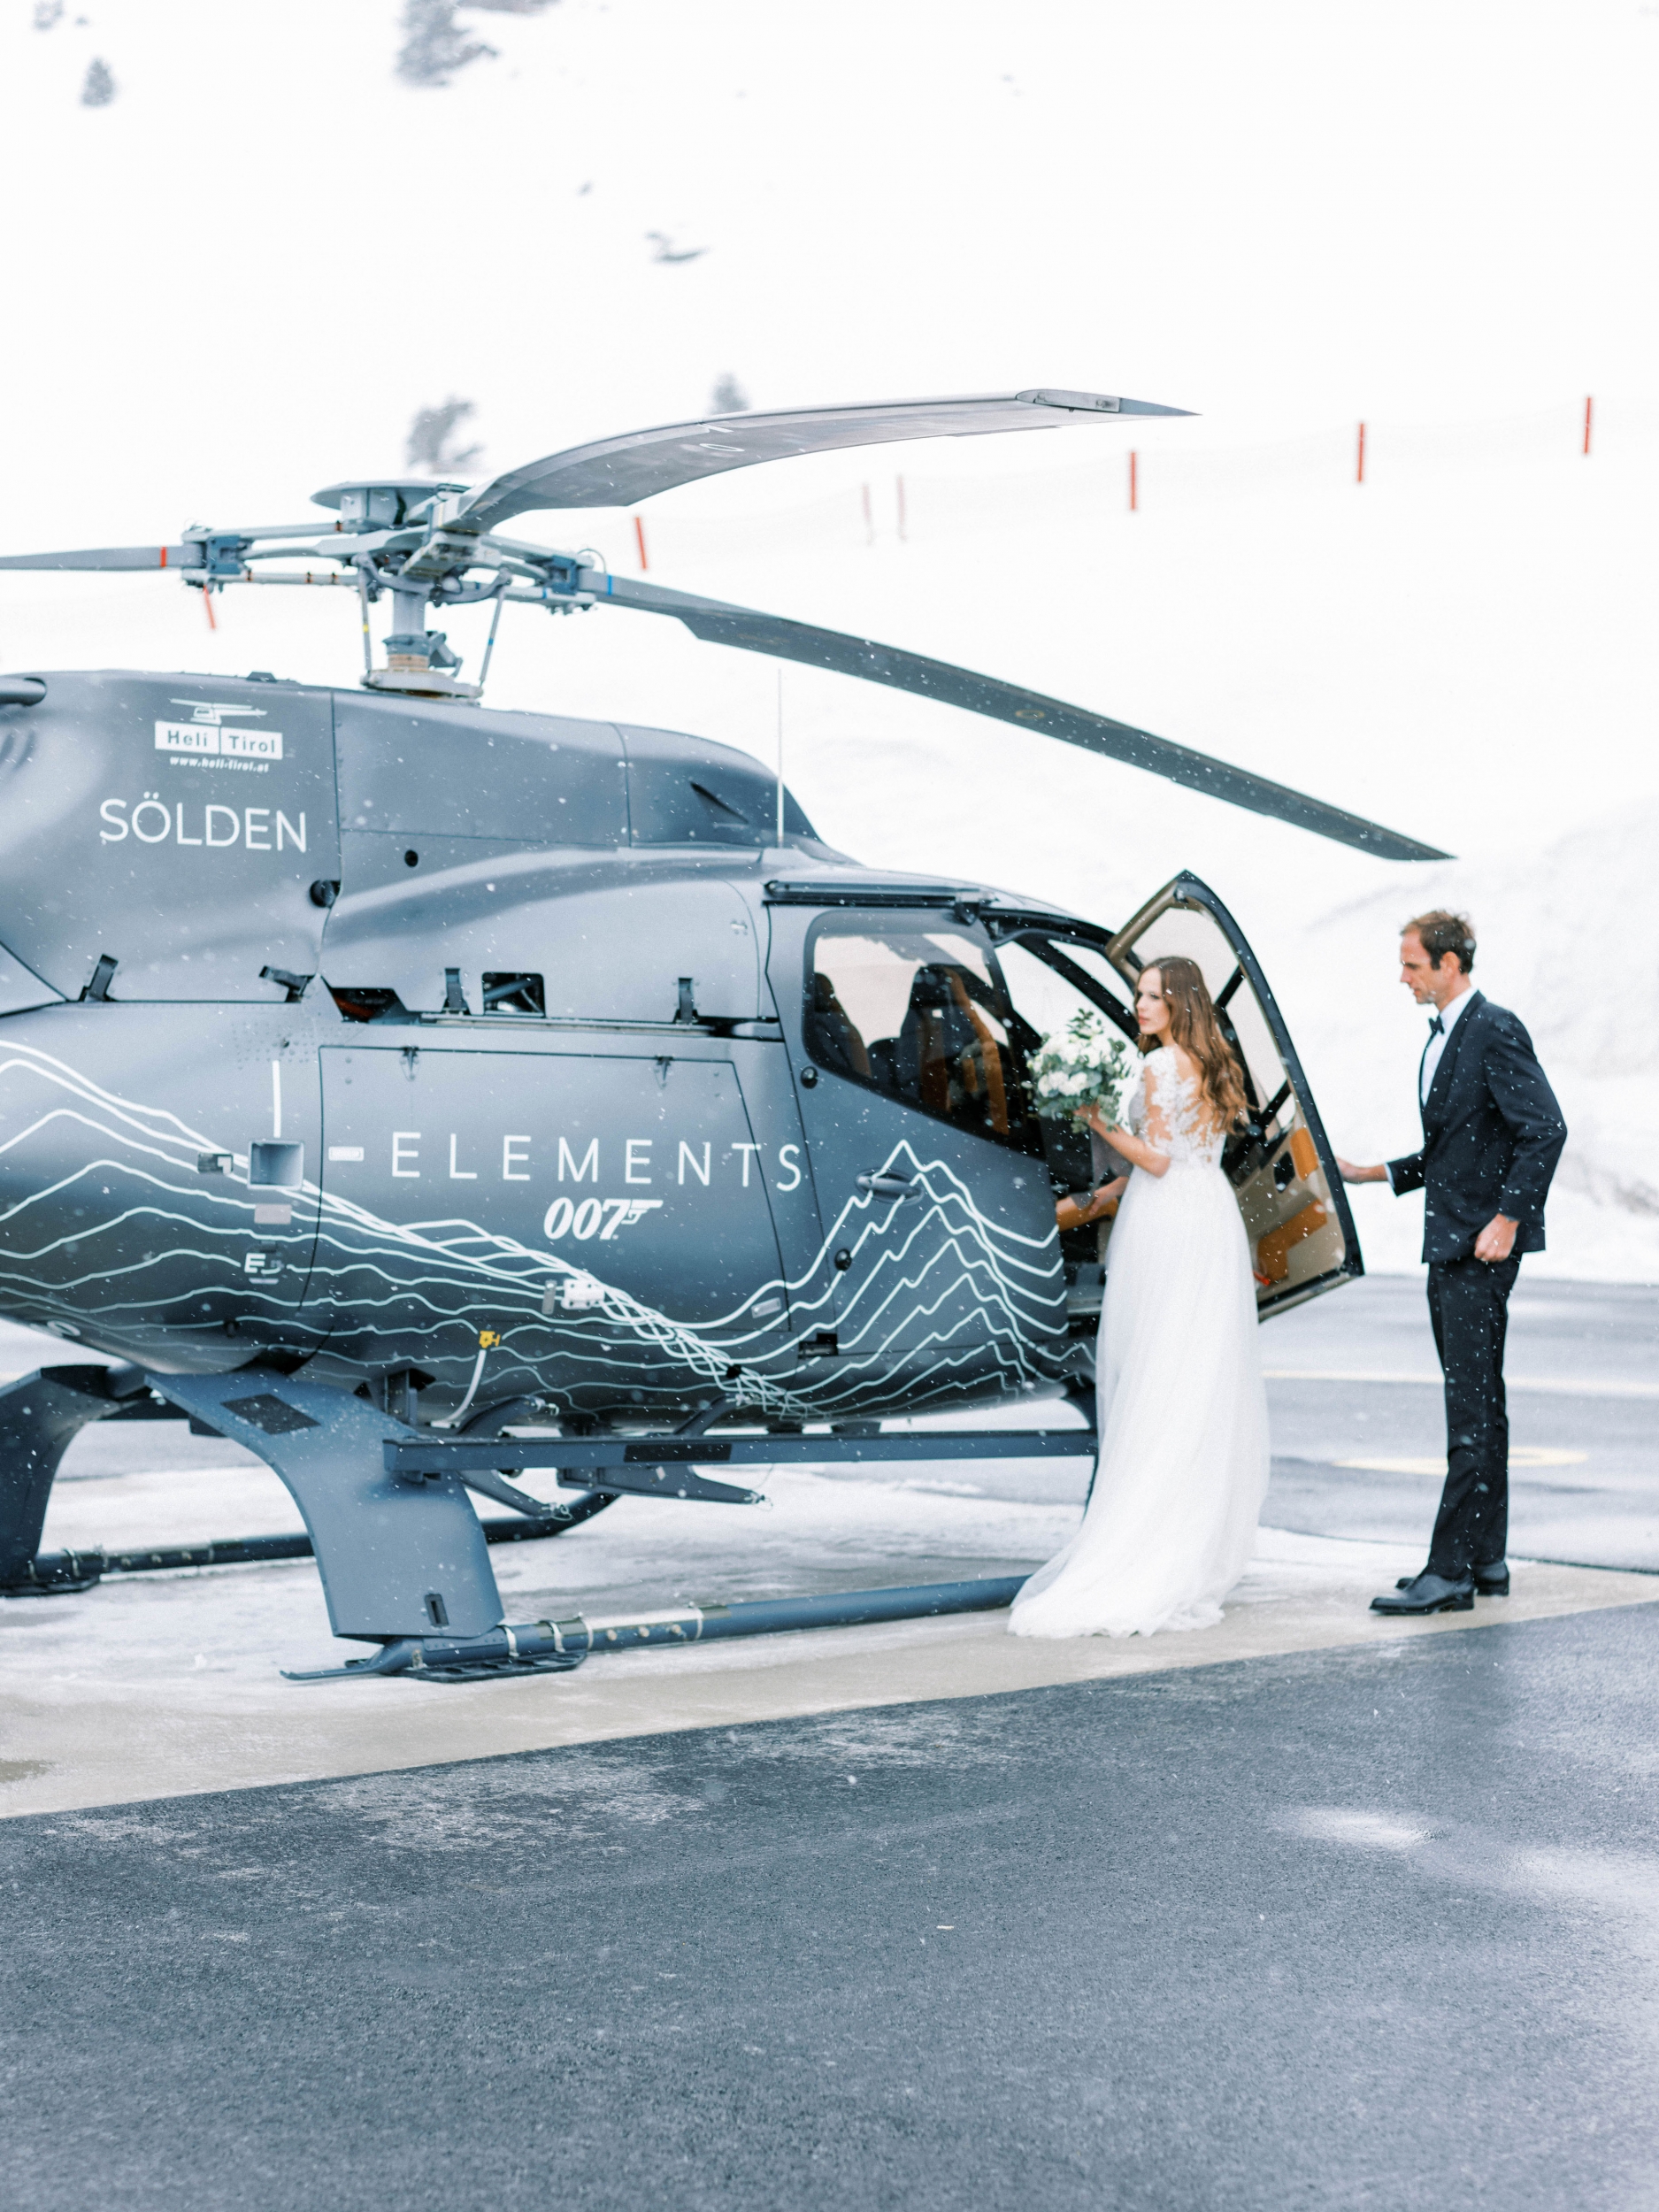 Brautpaar beim Helikopterflug in Sölden